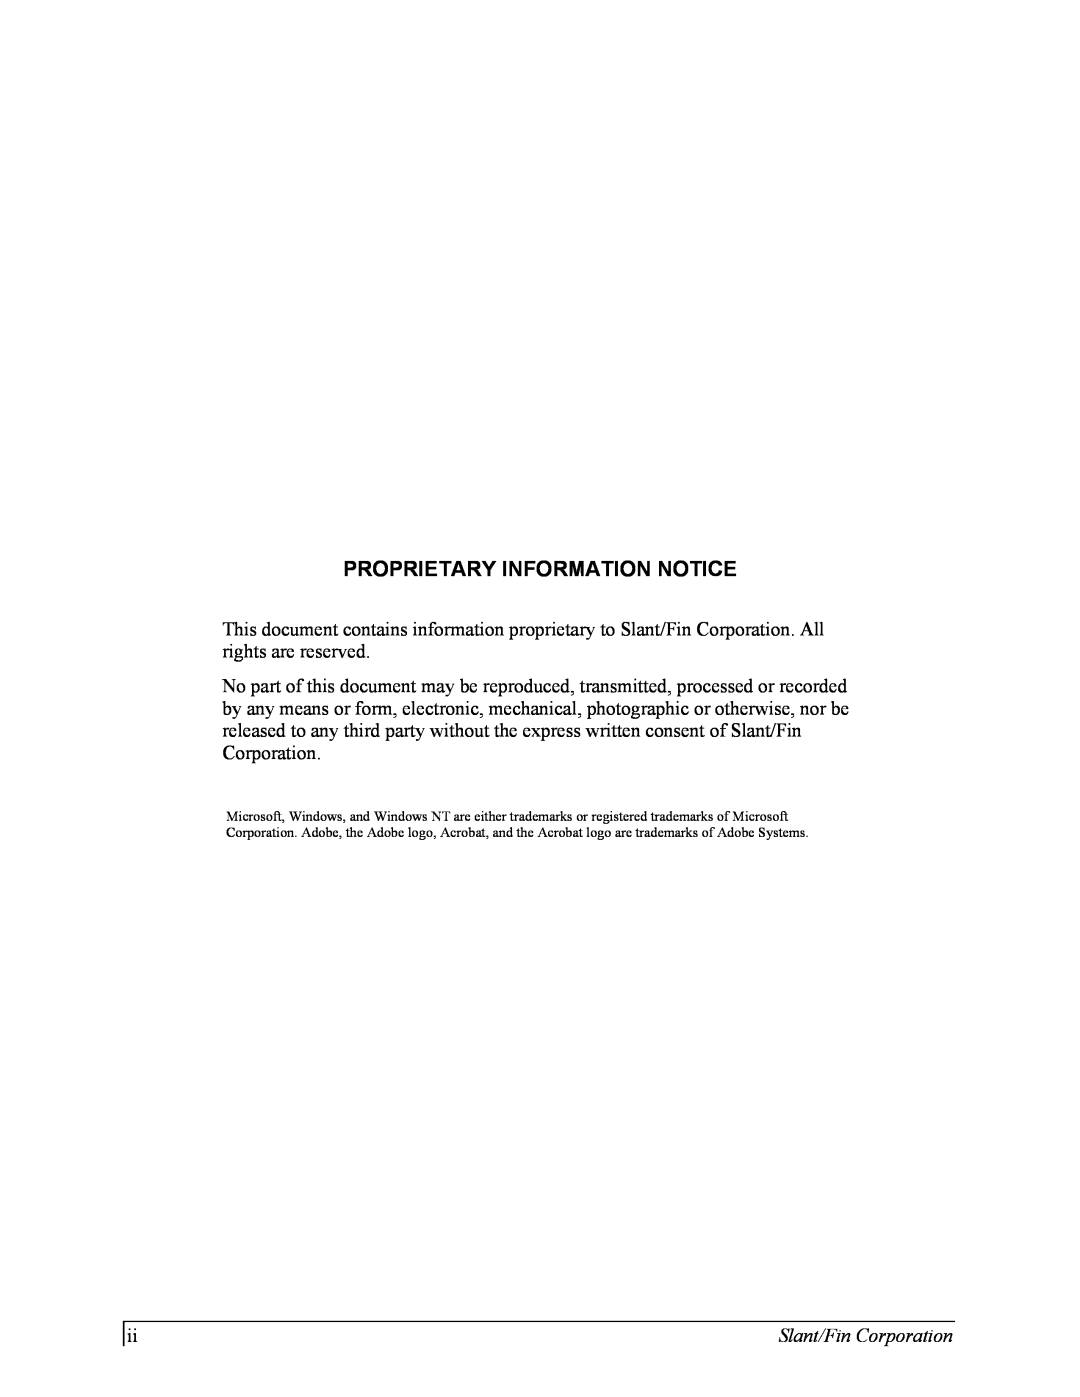 Slant/Fin Hydronic Explorer 2 user manual Proprietary Information Notice, Slant/Fin Corporation 